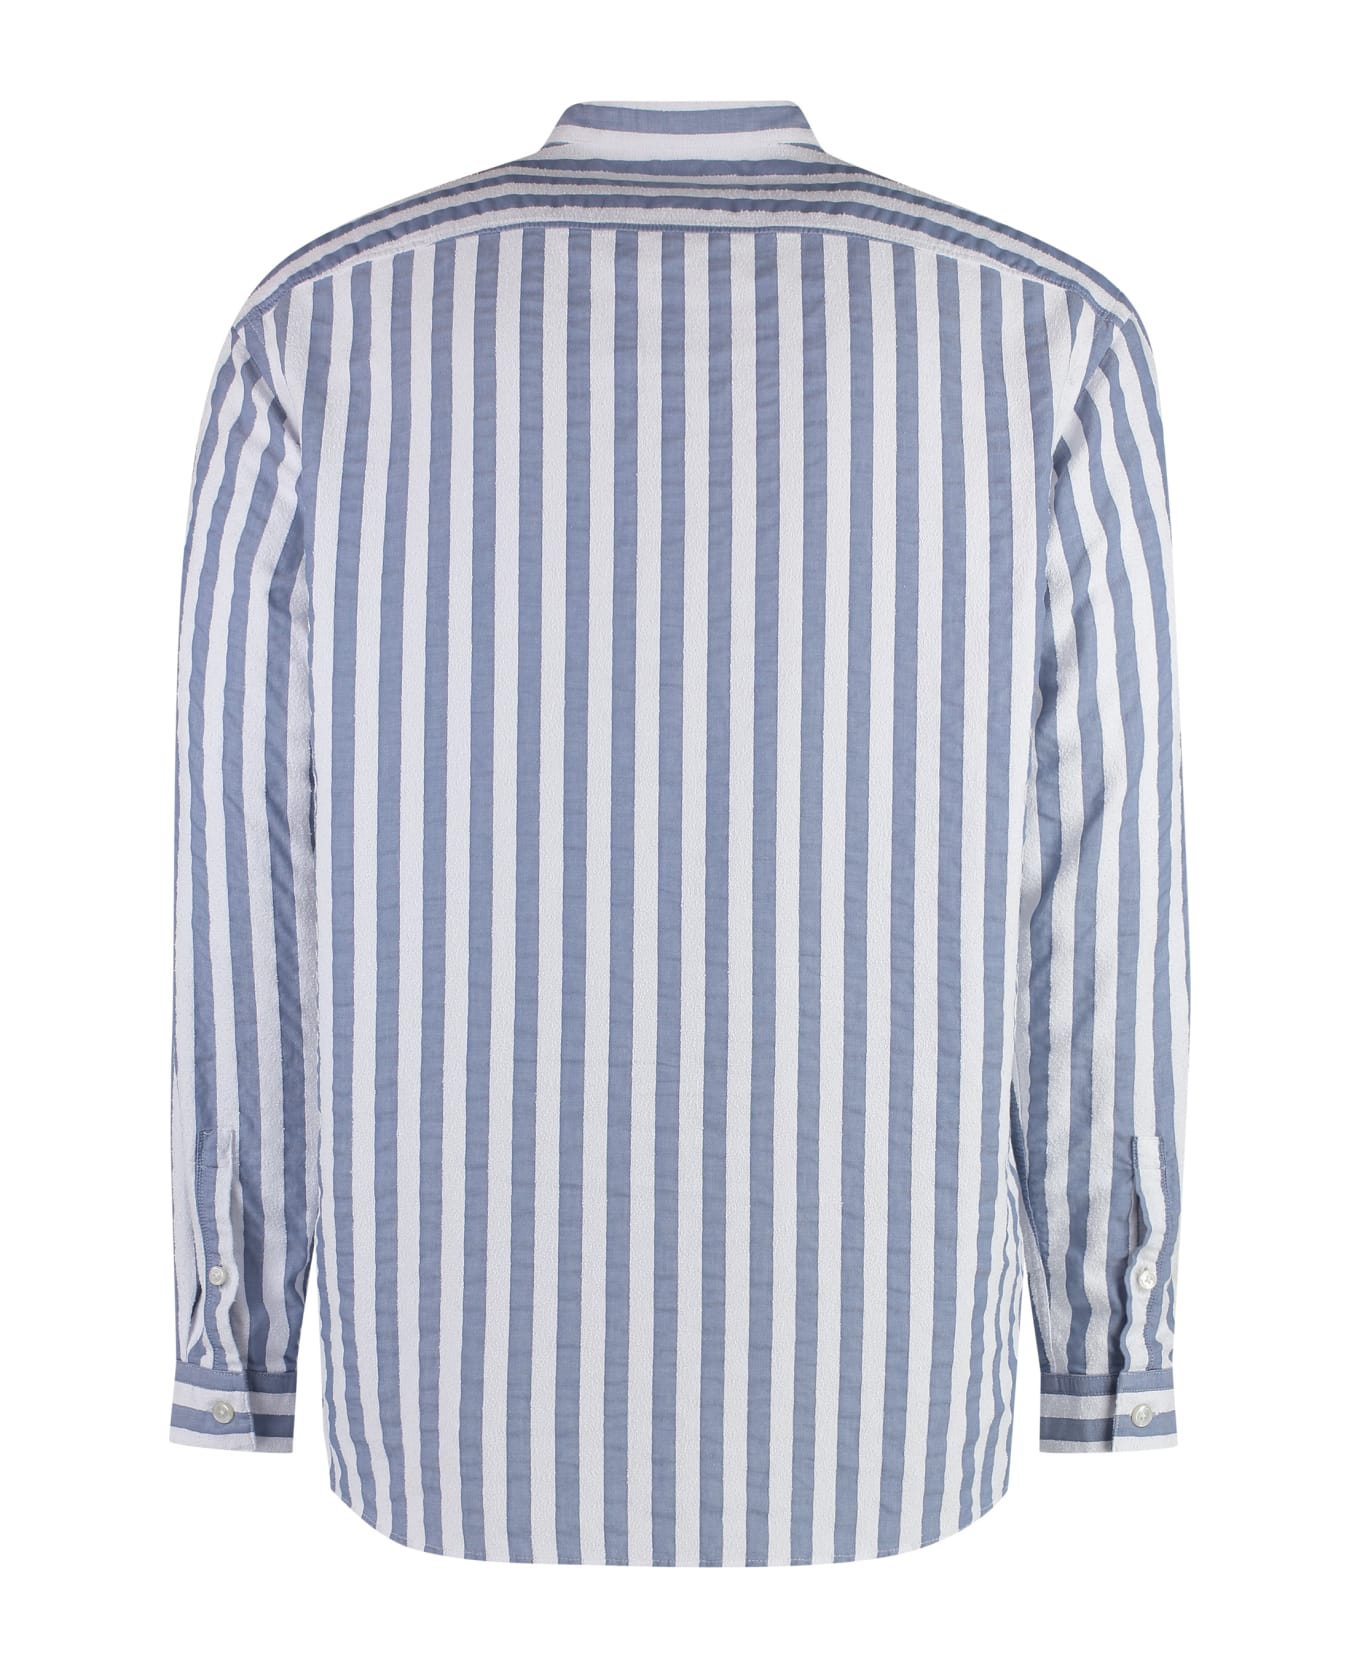 Hugo Boss Striped Cotton Shirt - White